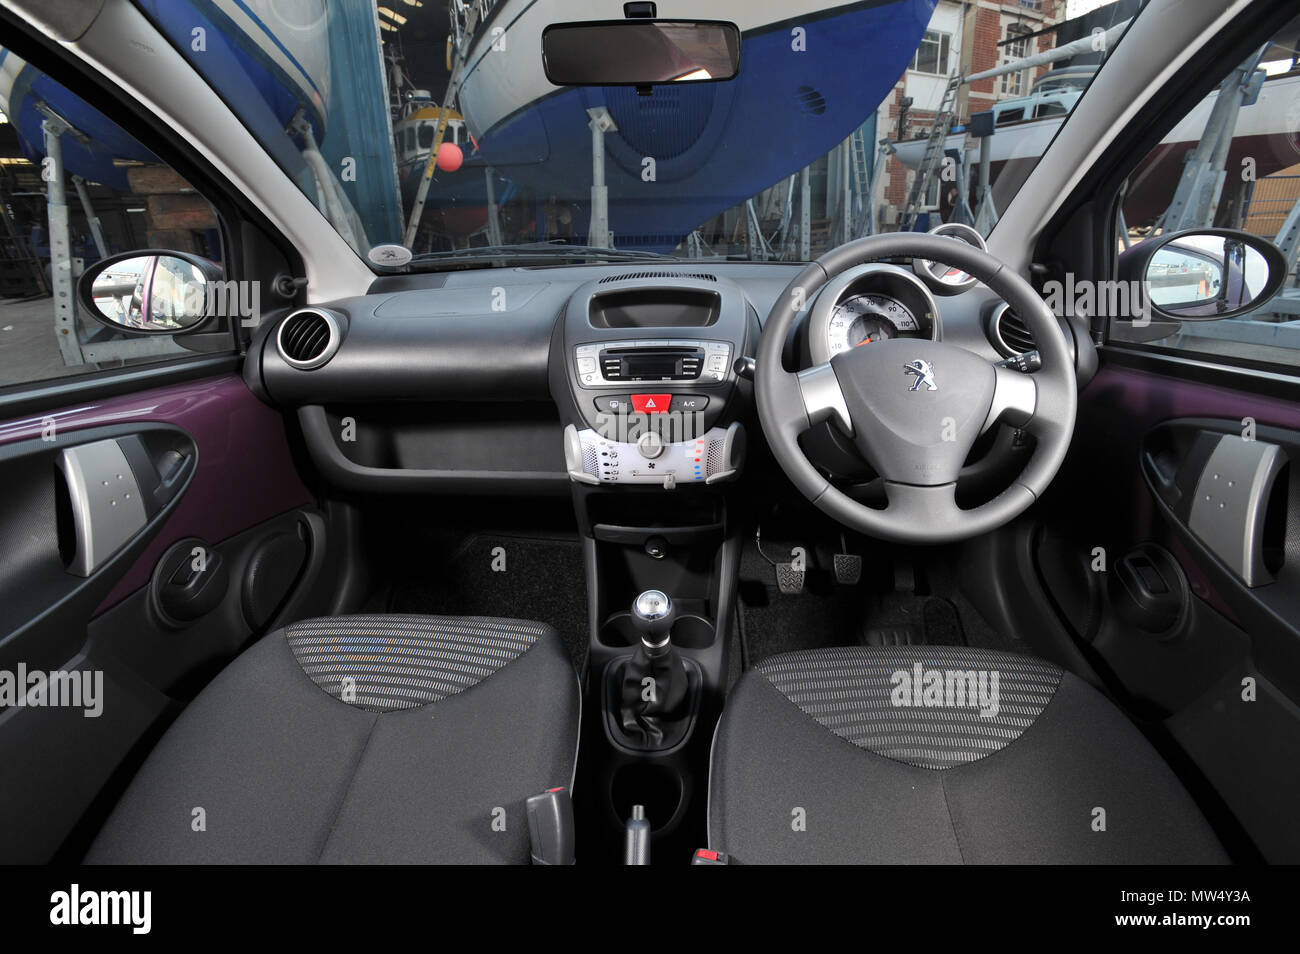 2012 Peugeot 107 compact city car Stock Photo